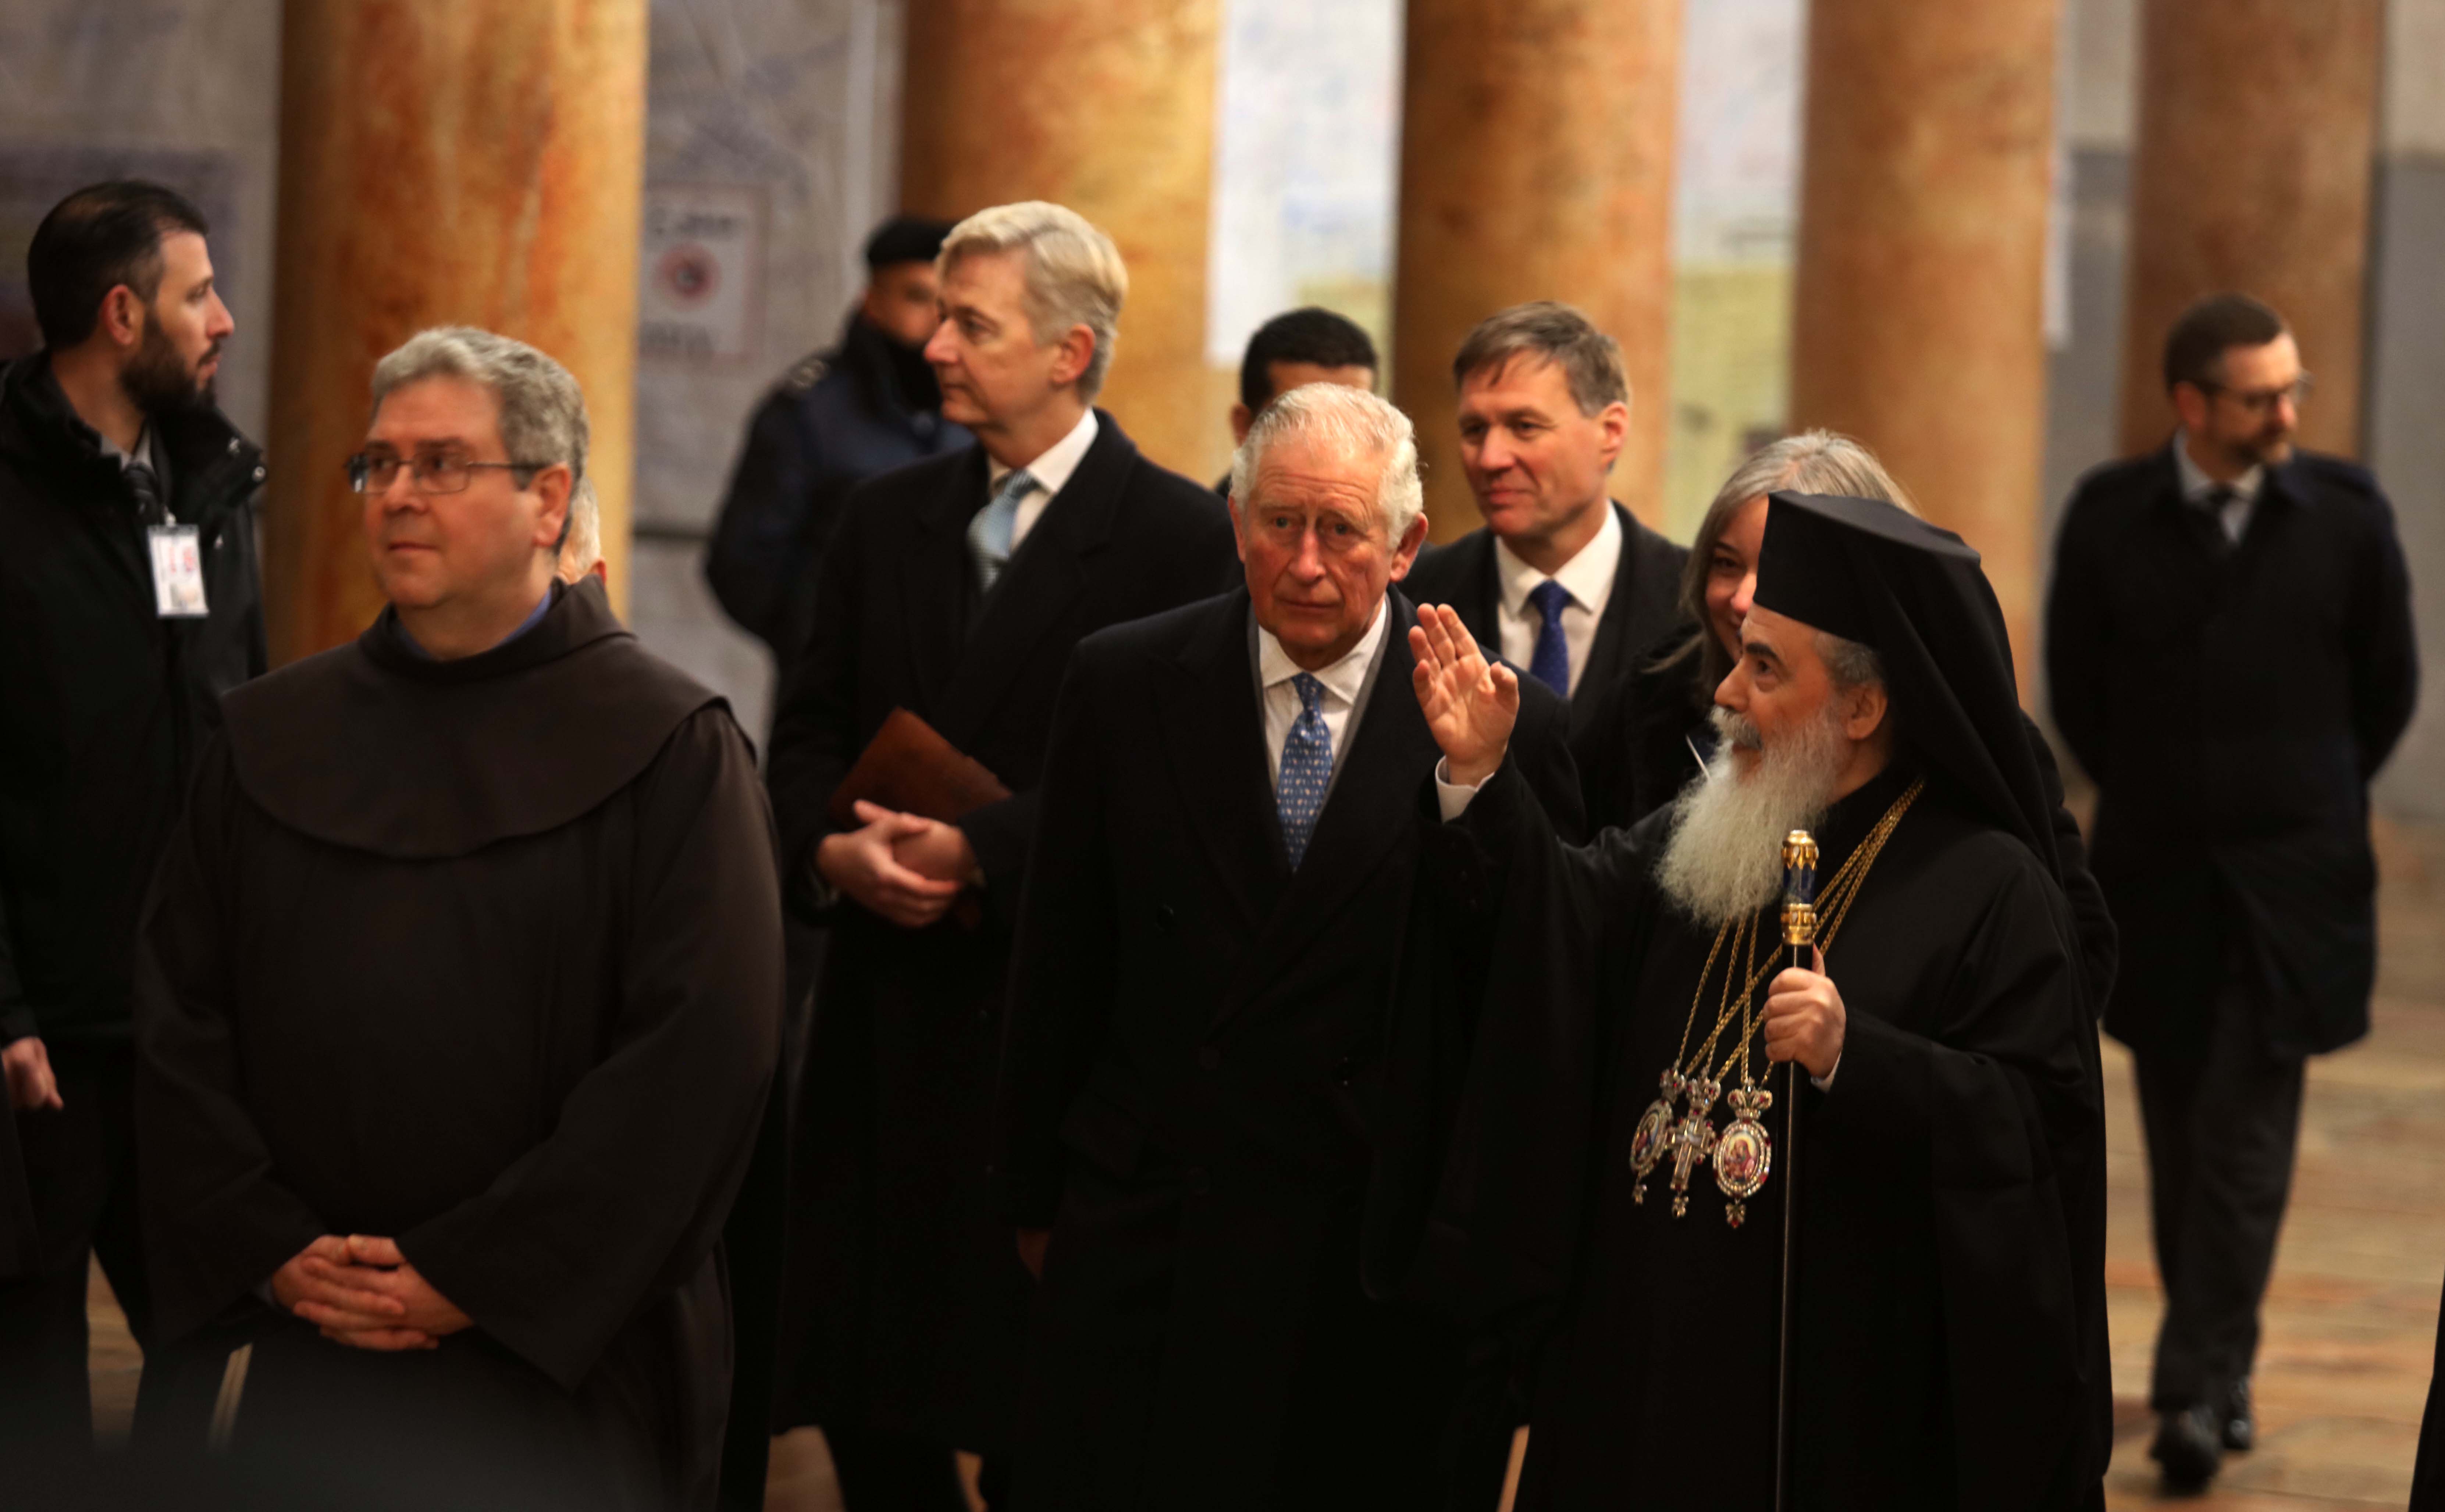 Prince Charles arrives in Bethlehem on historic visit